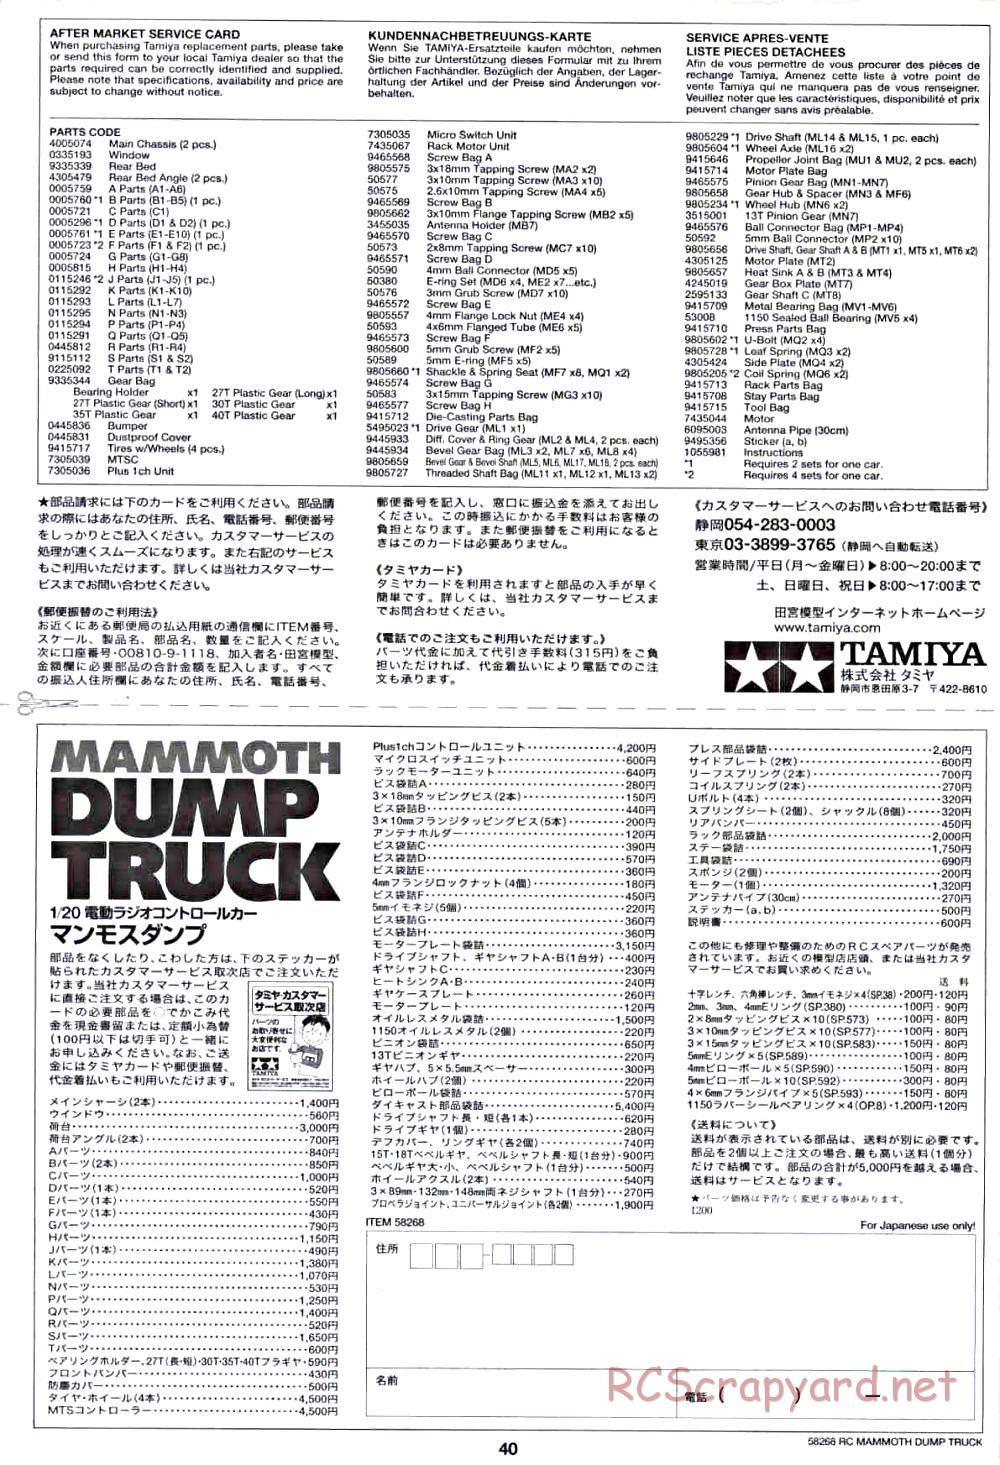 Tamiya - Mammoth Dump Truck Chassis - Manual - Page 40